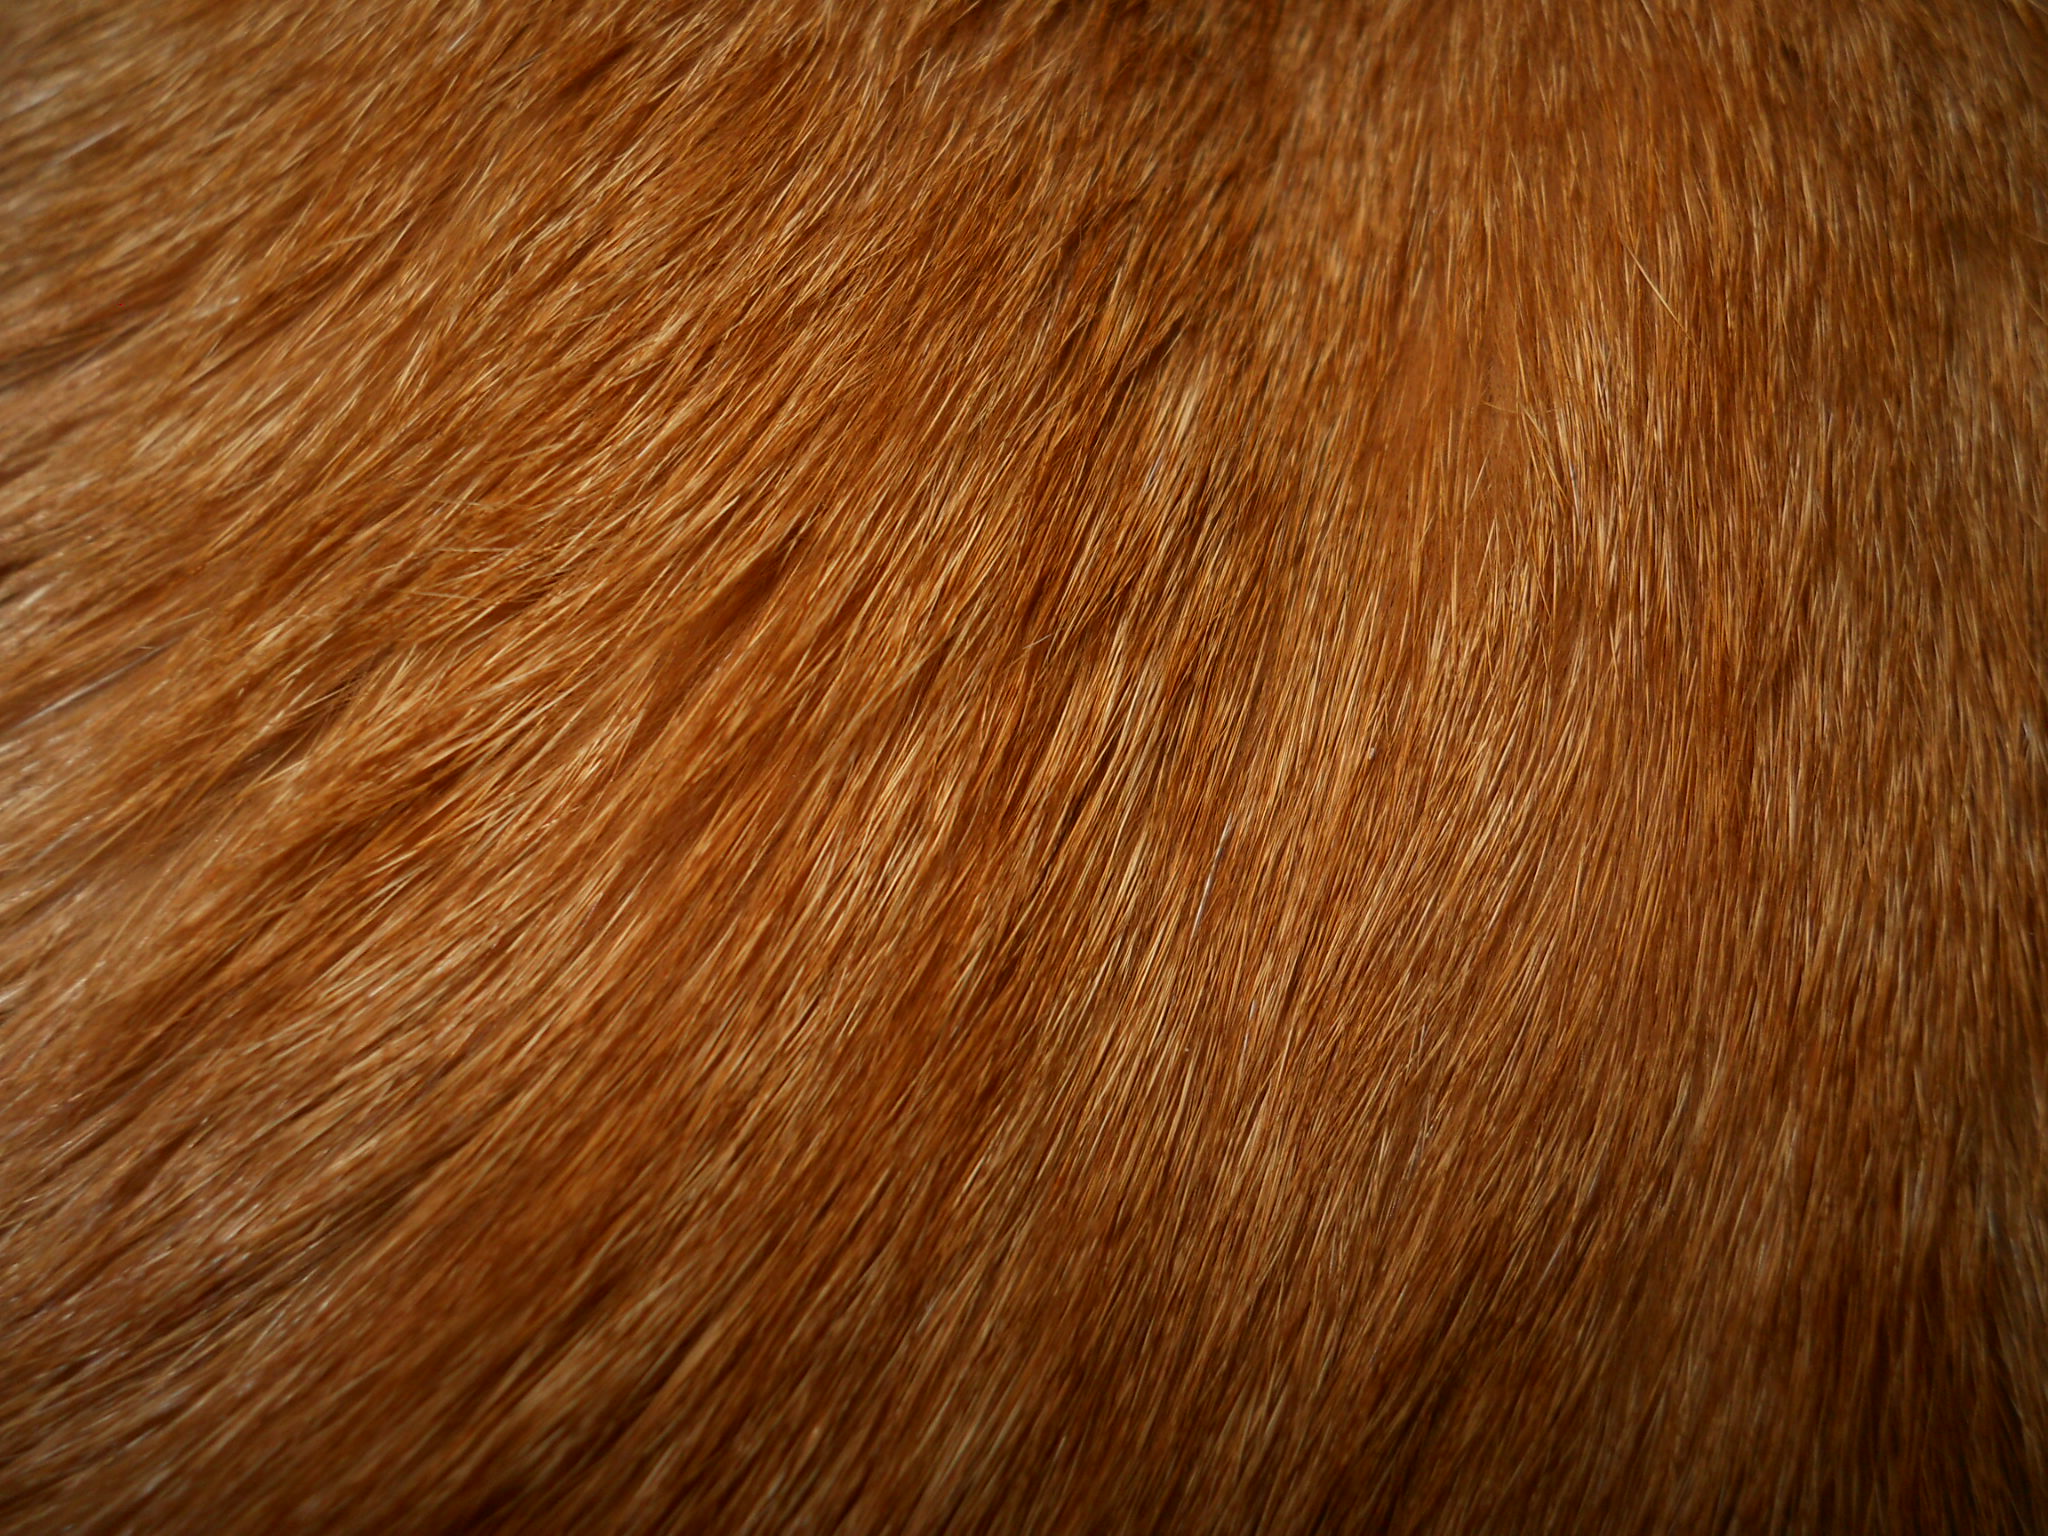  , texture fur, fur texture background, background